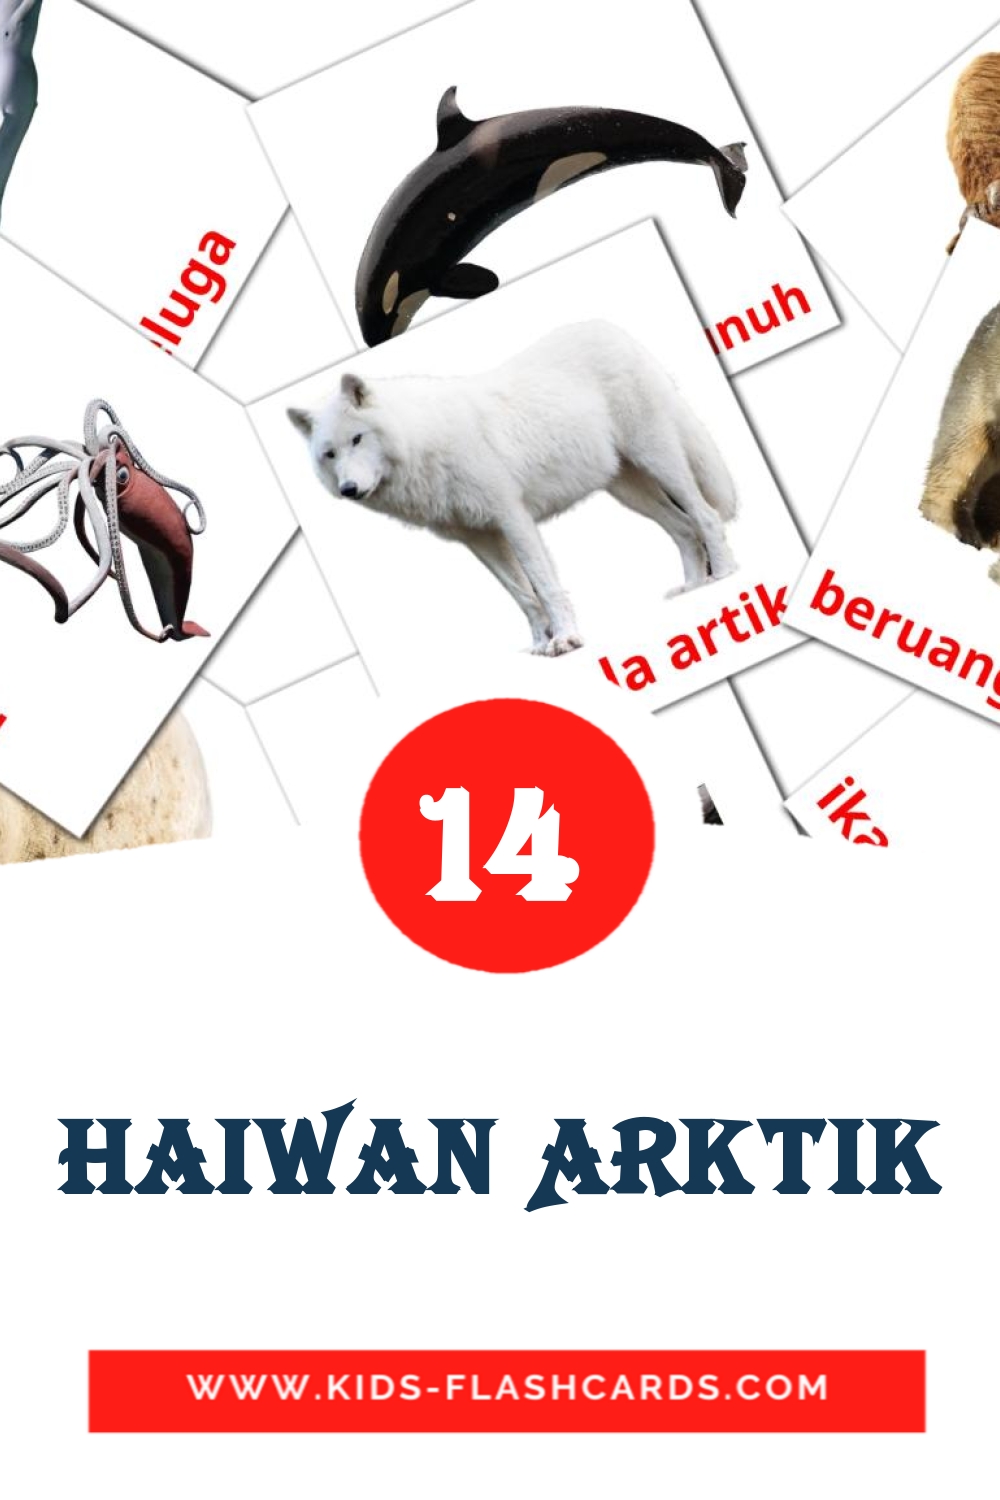 14 carte illustrate di Haiwan Arktik per la scuola materna in malese